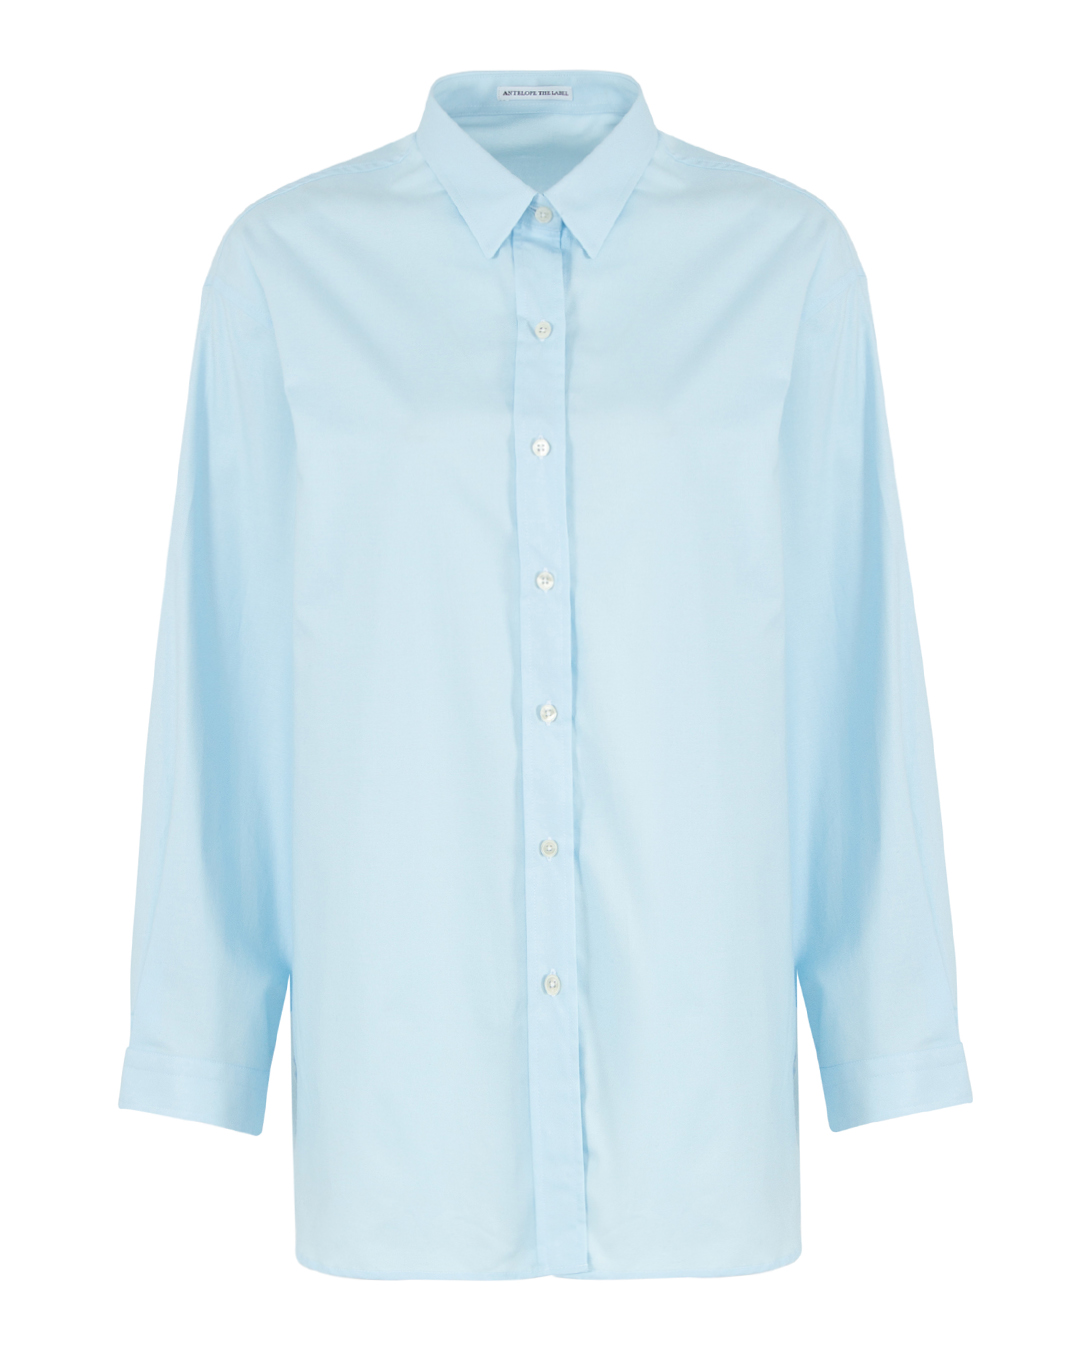 хлопковая рубашка ANTELOPE THE LABEL A1.BABY BLUE голубой UNI, размер UNI - фото 1